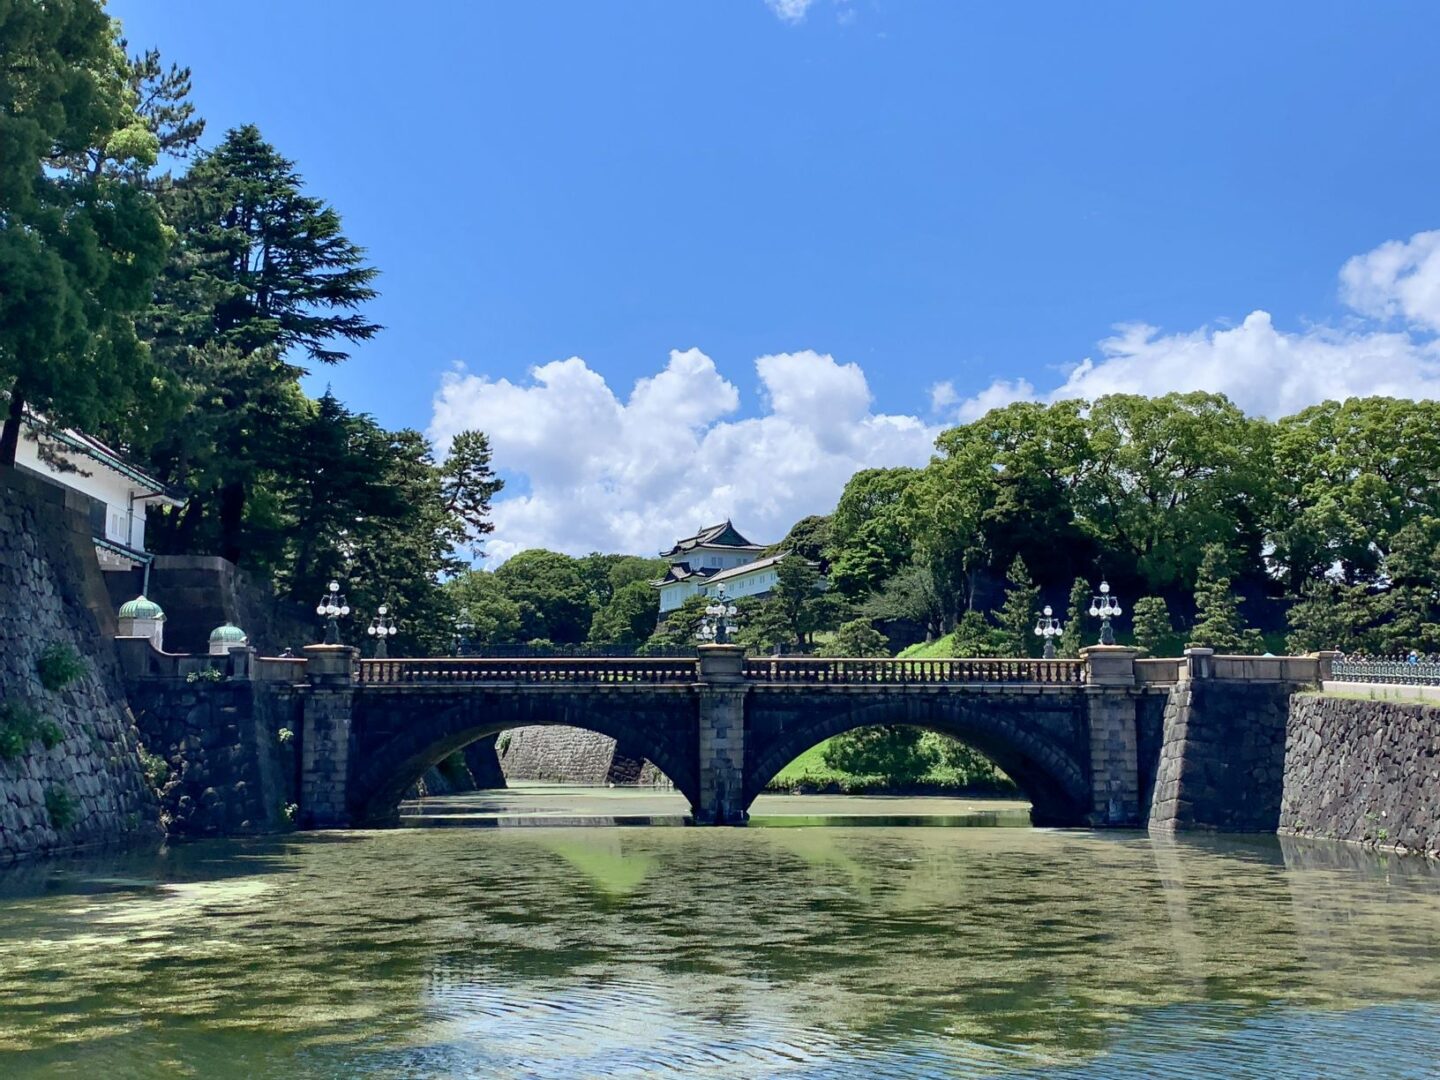 皇居二重橋 - Imperial Palace